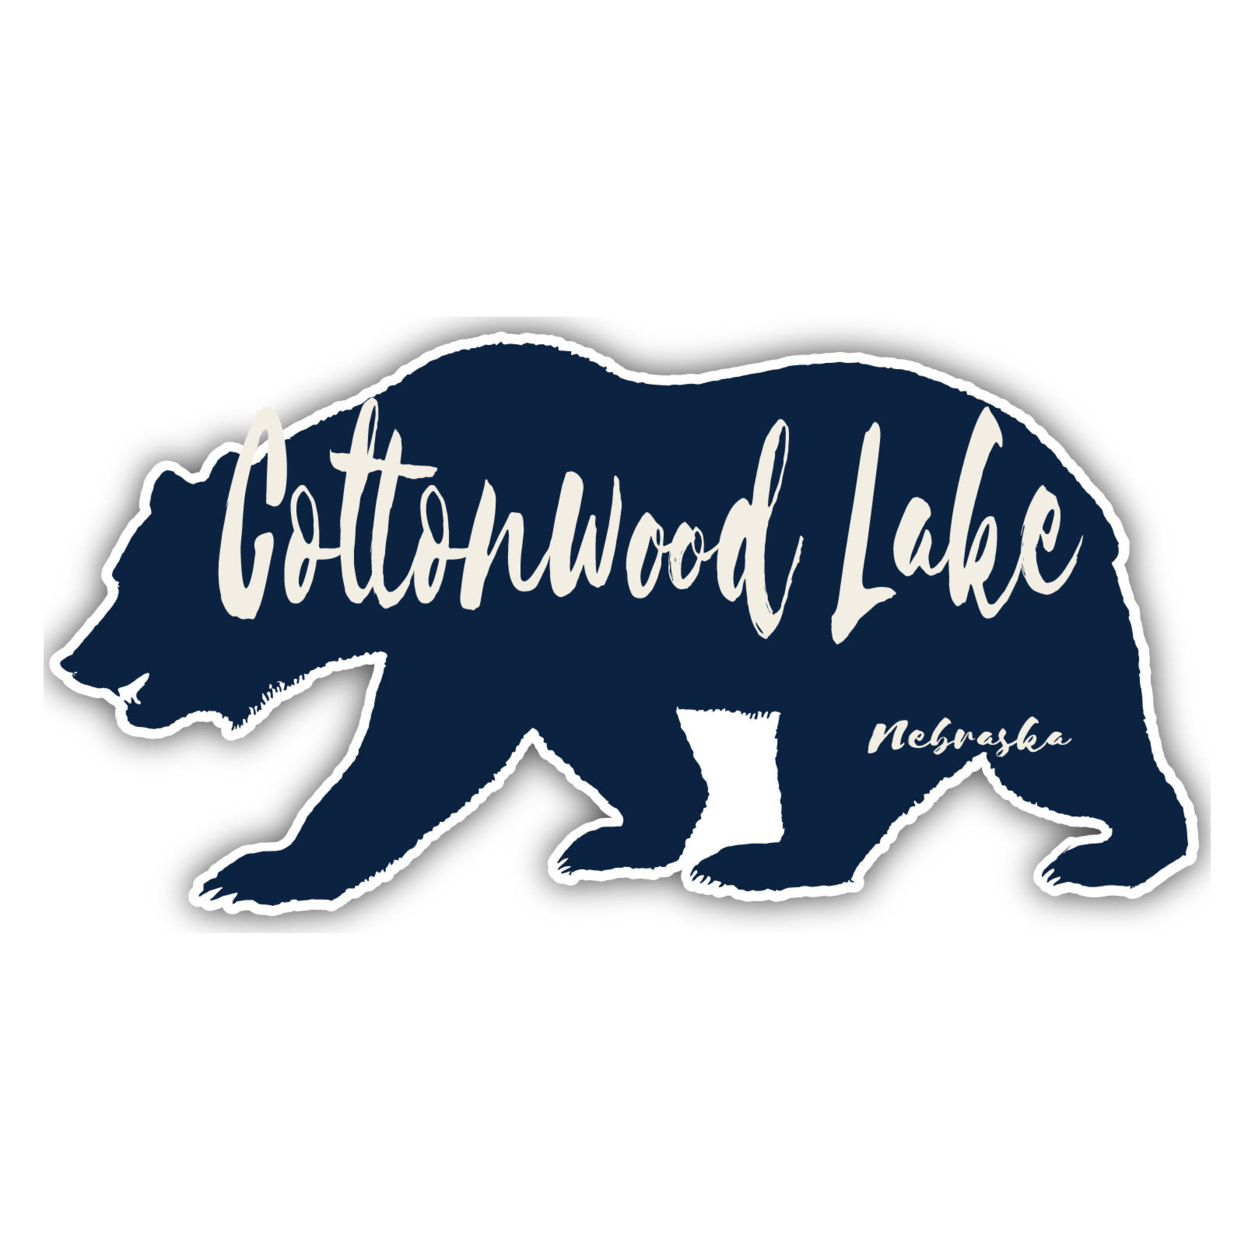 Cottonwood Lake Nebraska Souvenir Decorative Stickers (Choose Theme And Size) - Single Unit, 6-Inch, Bear